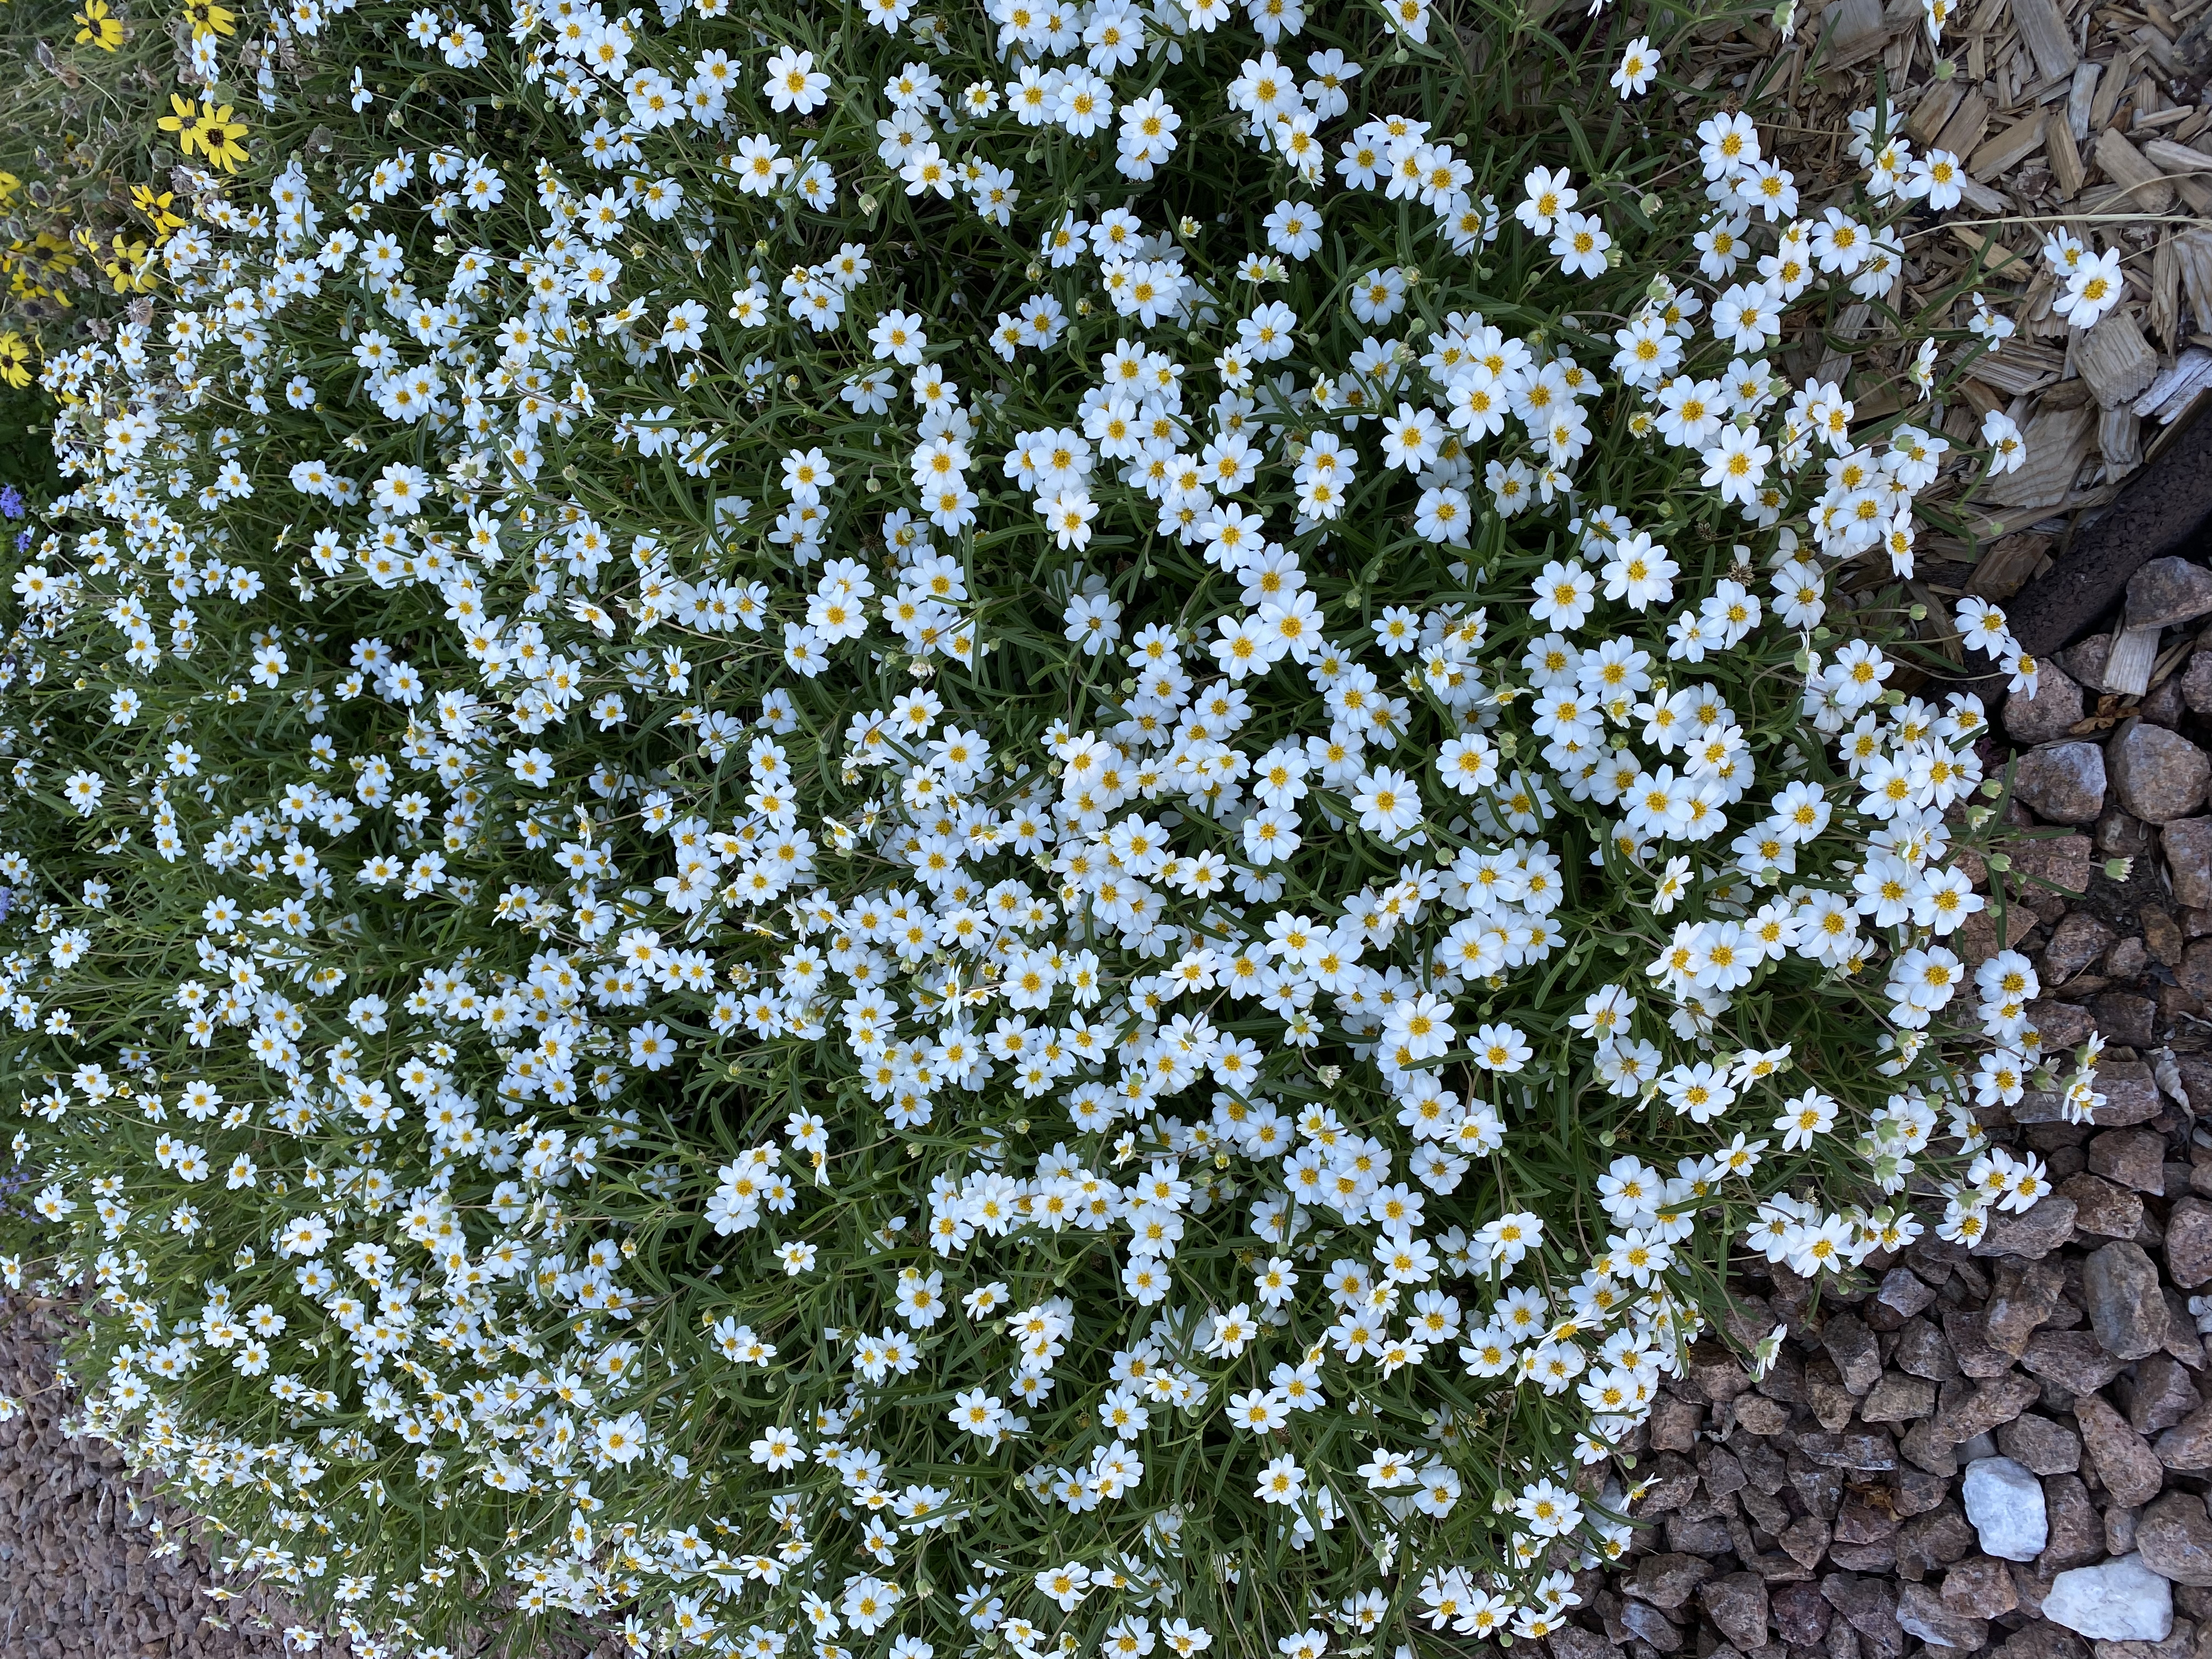 Blackfoot daisy (Melempodium leucanthum)